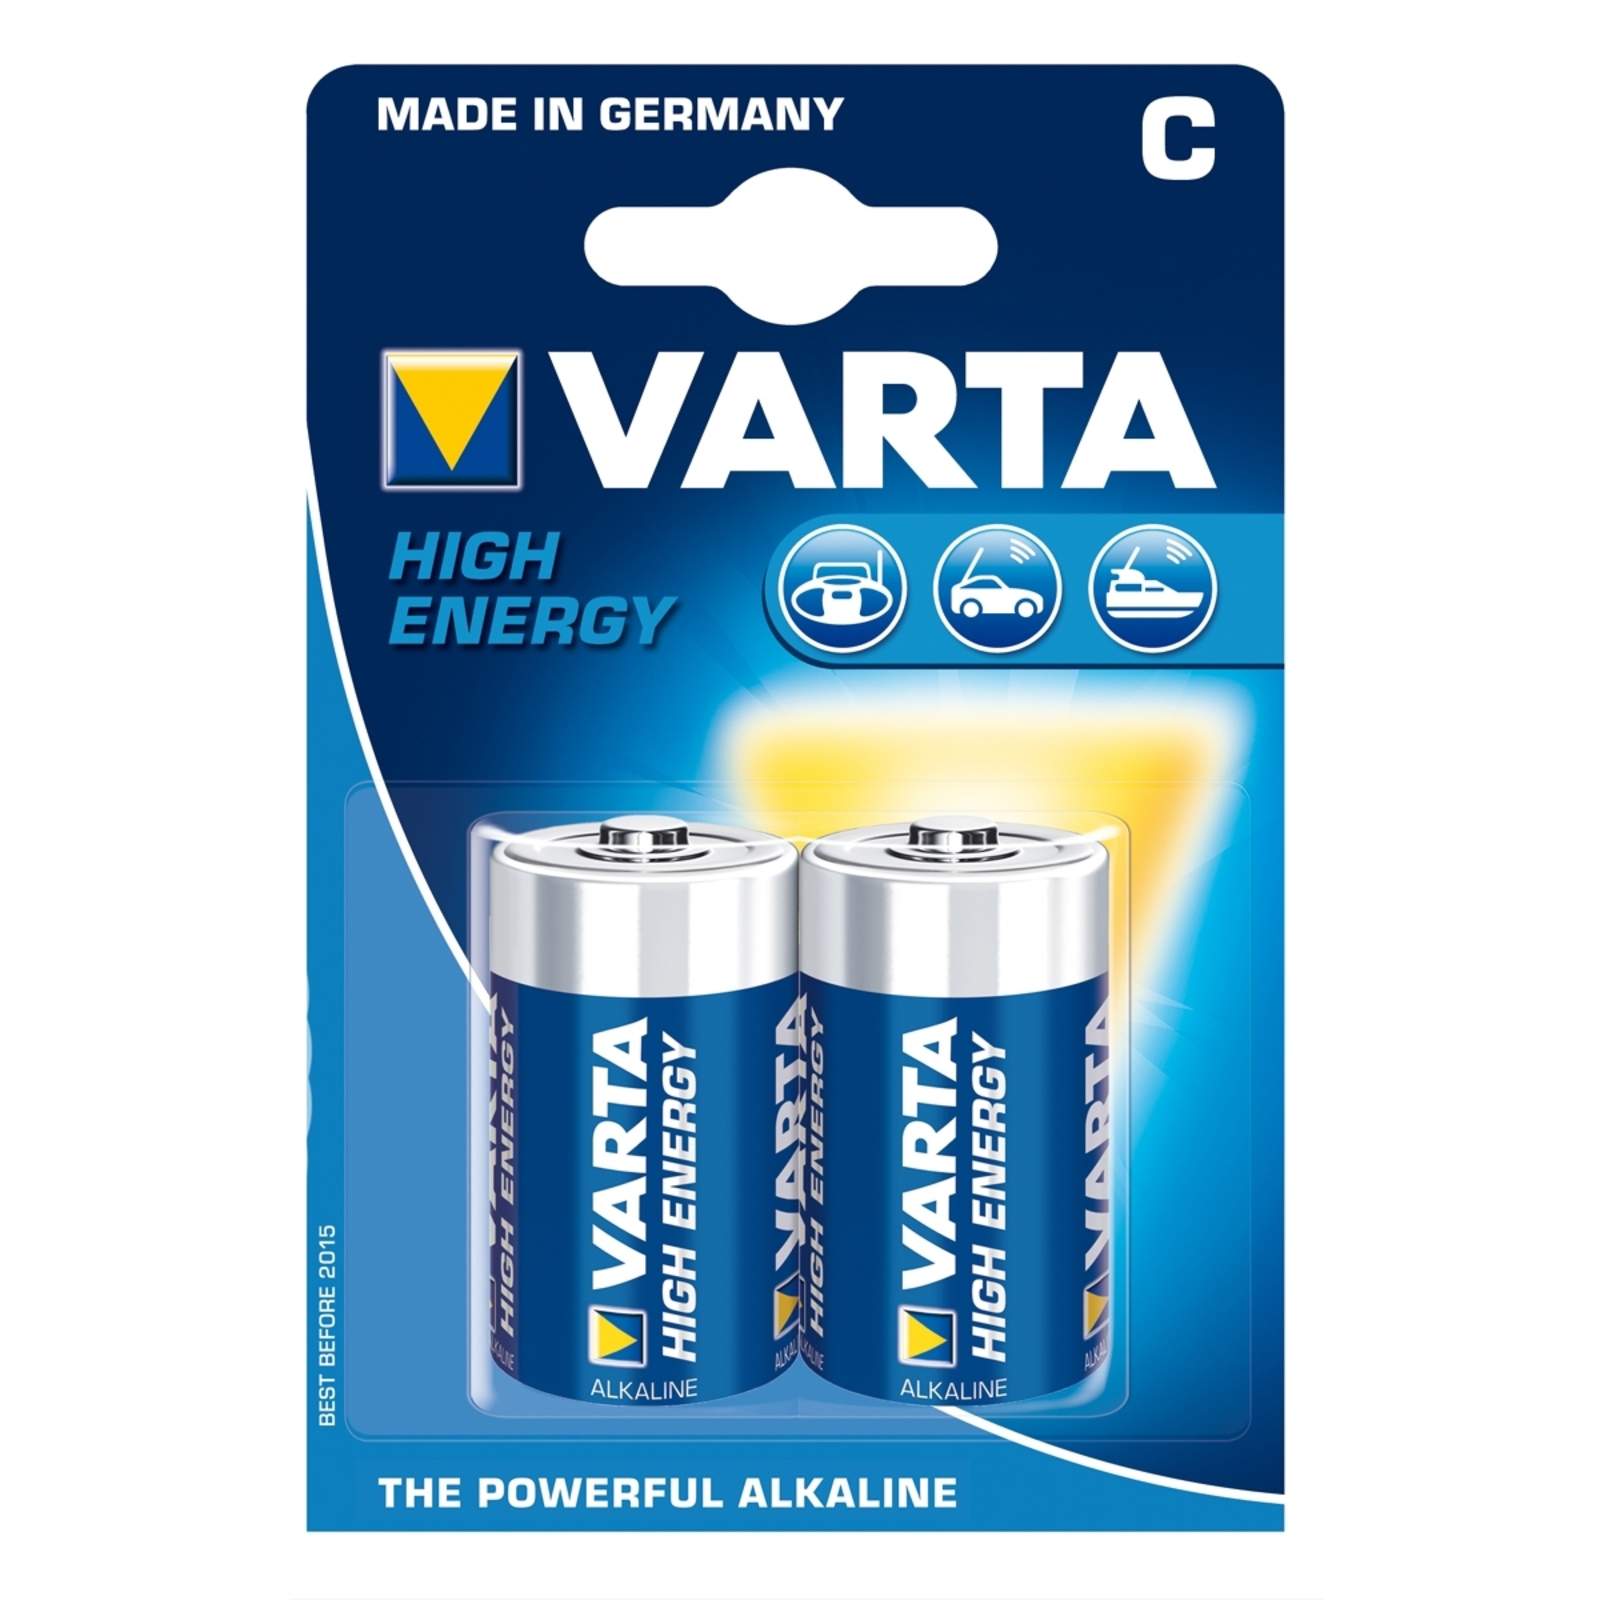 VARTA High Energy batterijen, baby 4914 - C